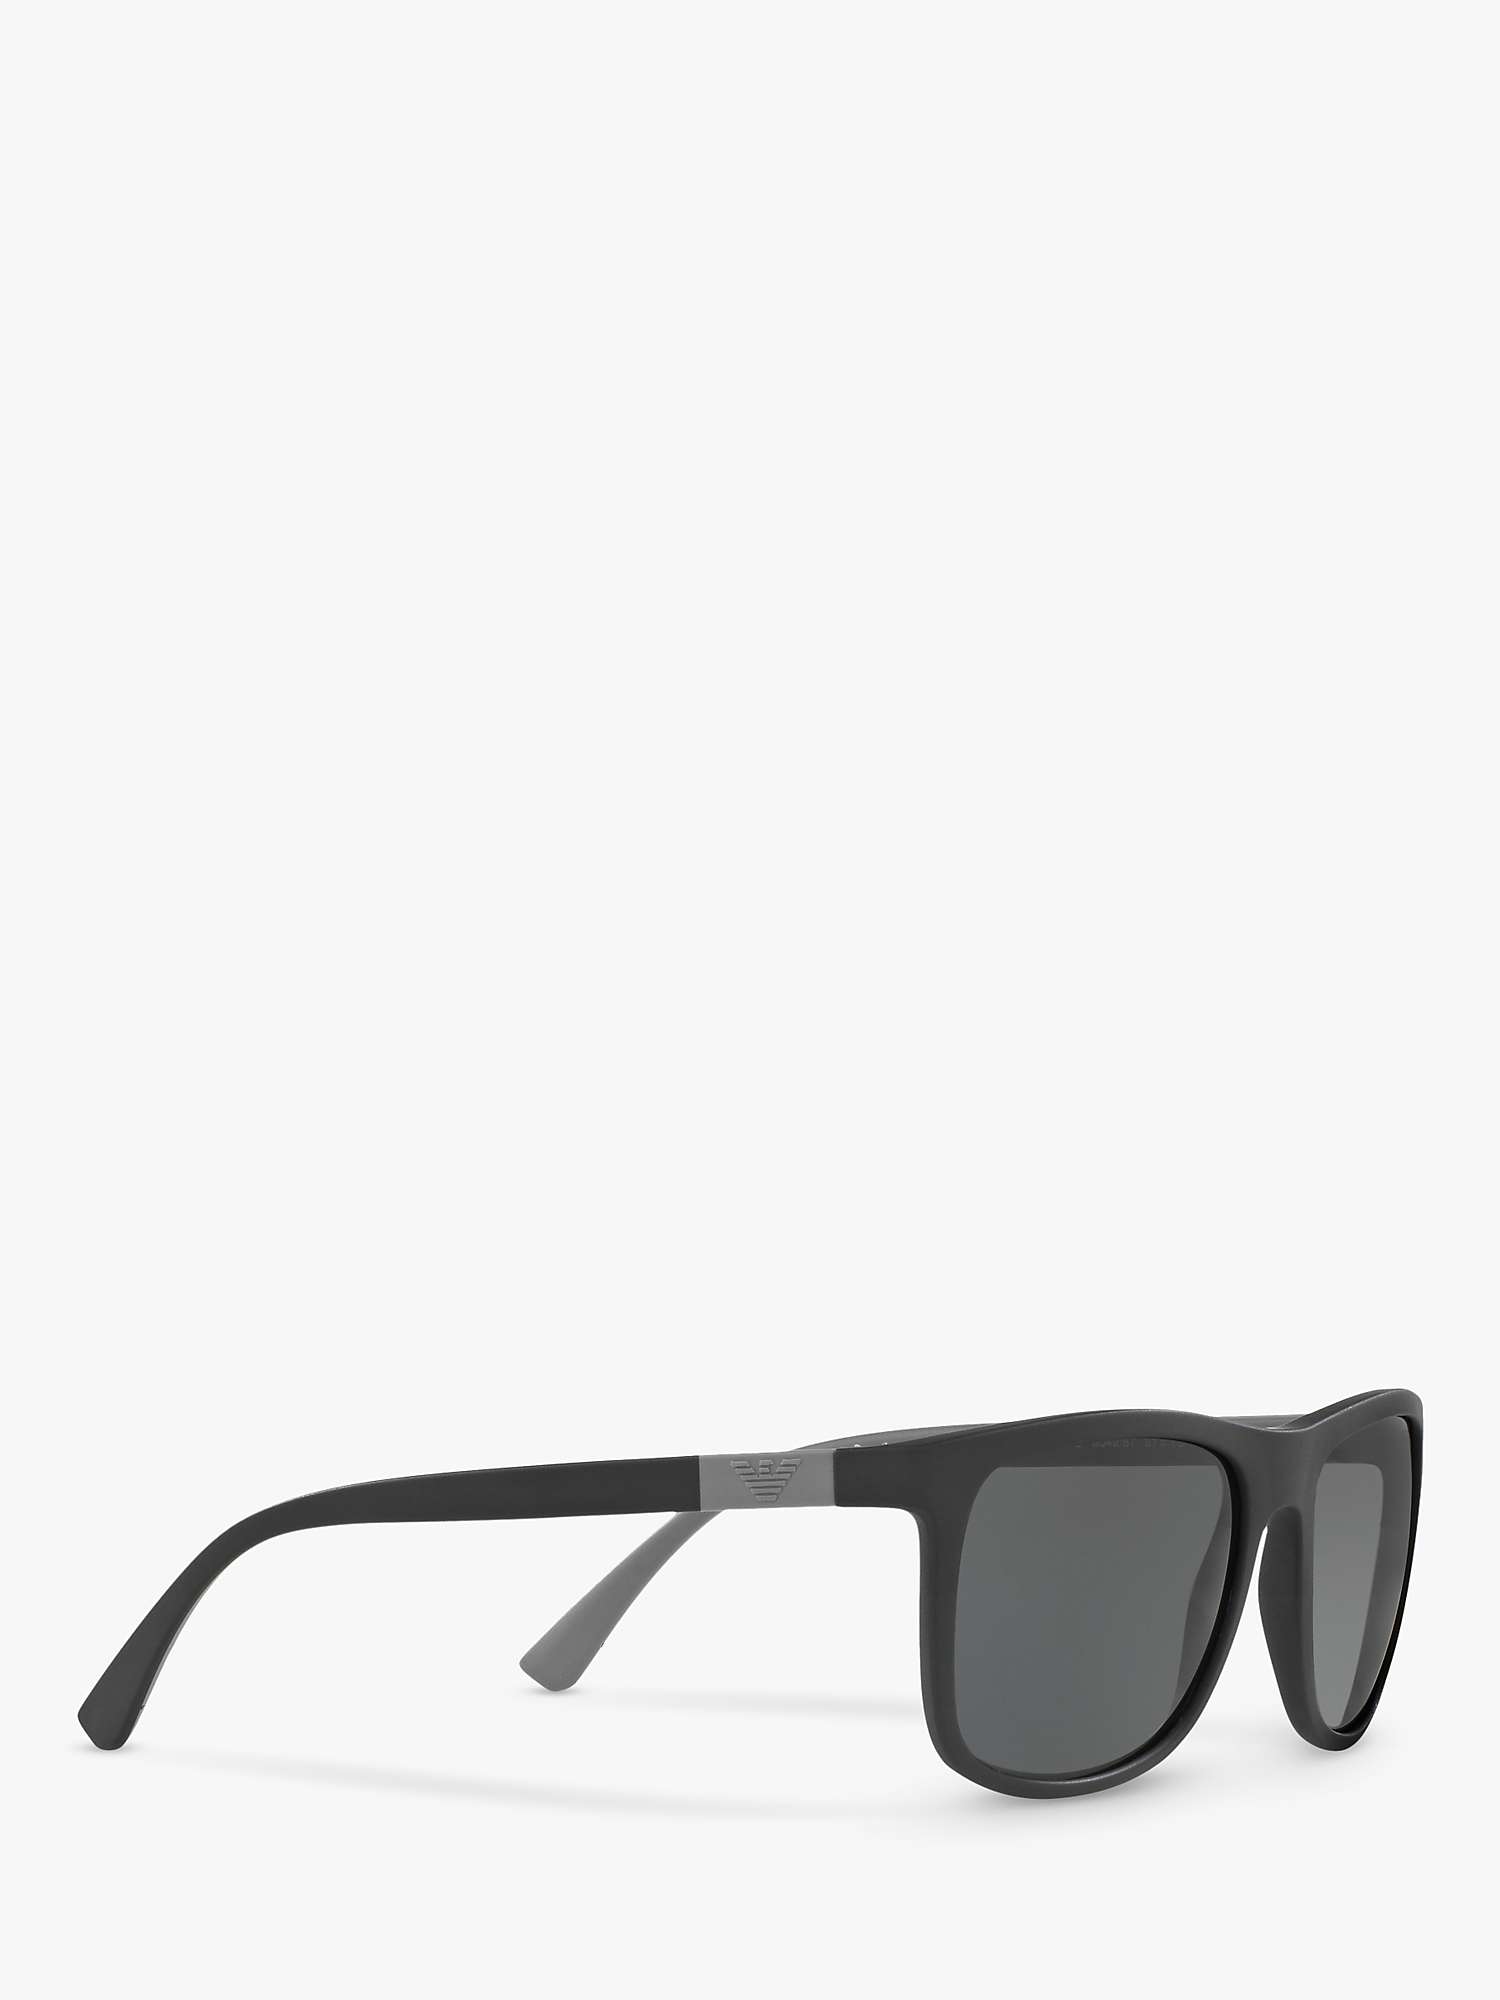 Buy Emporio Armani EA4079 Men's Square Sunglasses, Matte Black/Grey Online at johnlewis.com